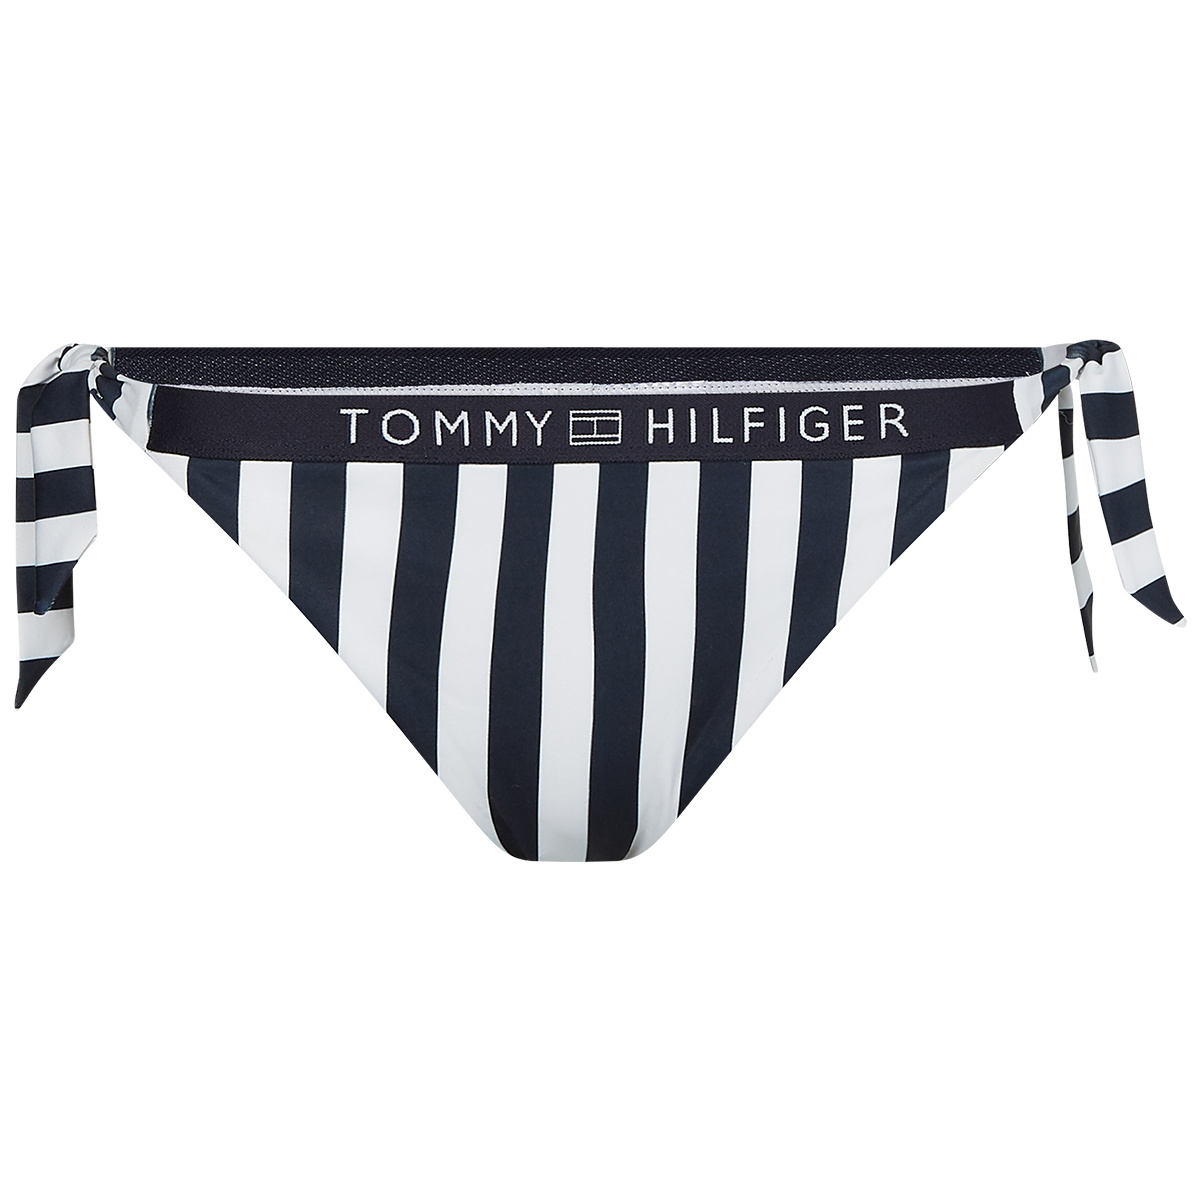 Tommy Hilfiger Lingeri Bikini Tai W U, Farve: Sort/Hvid, Størrelse: L, Dame